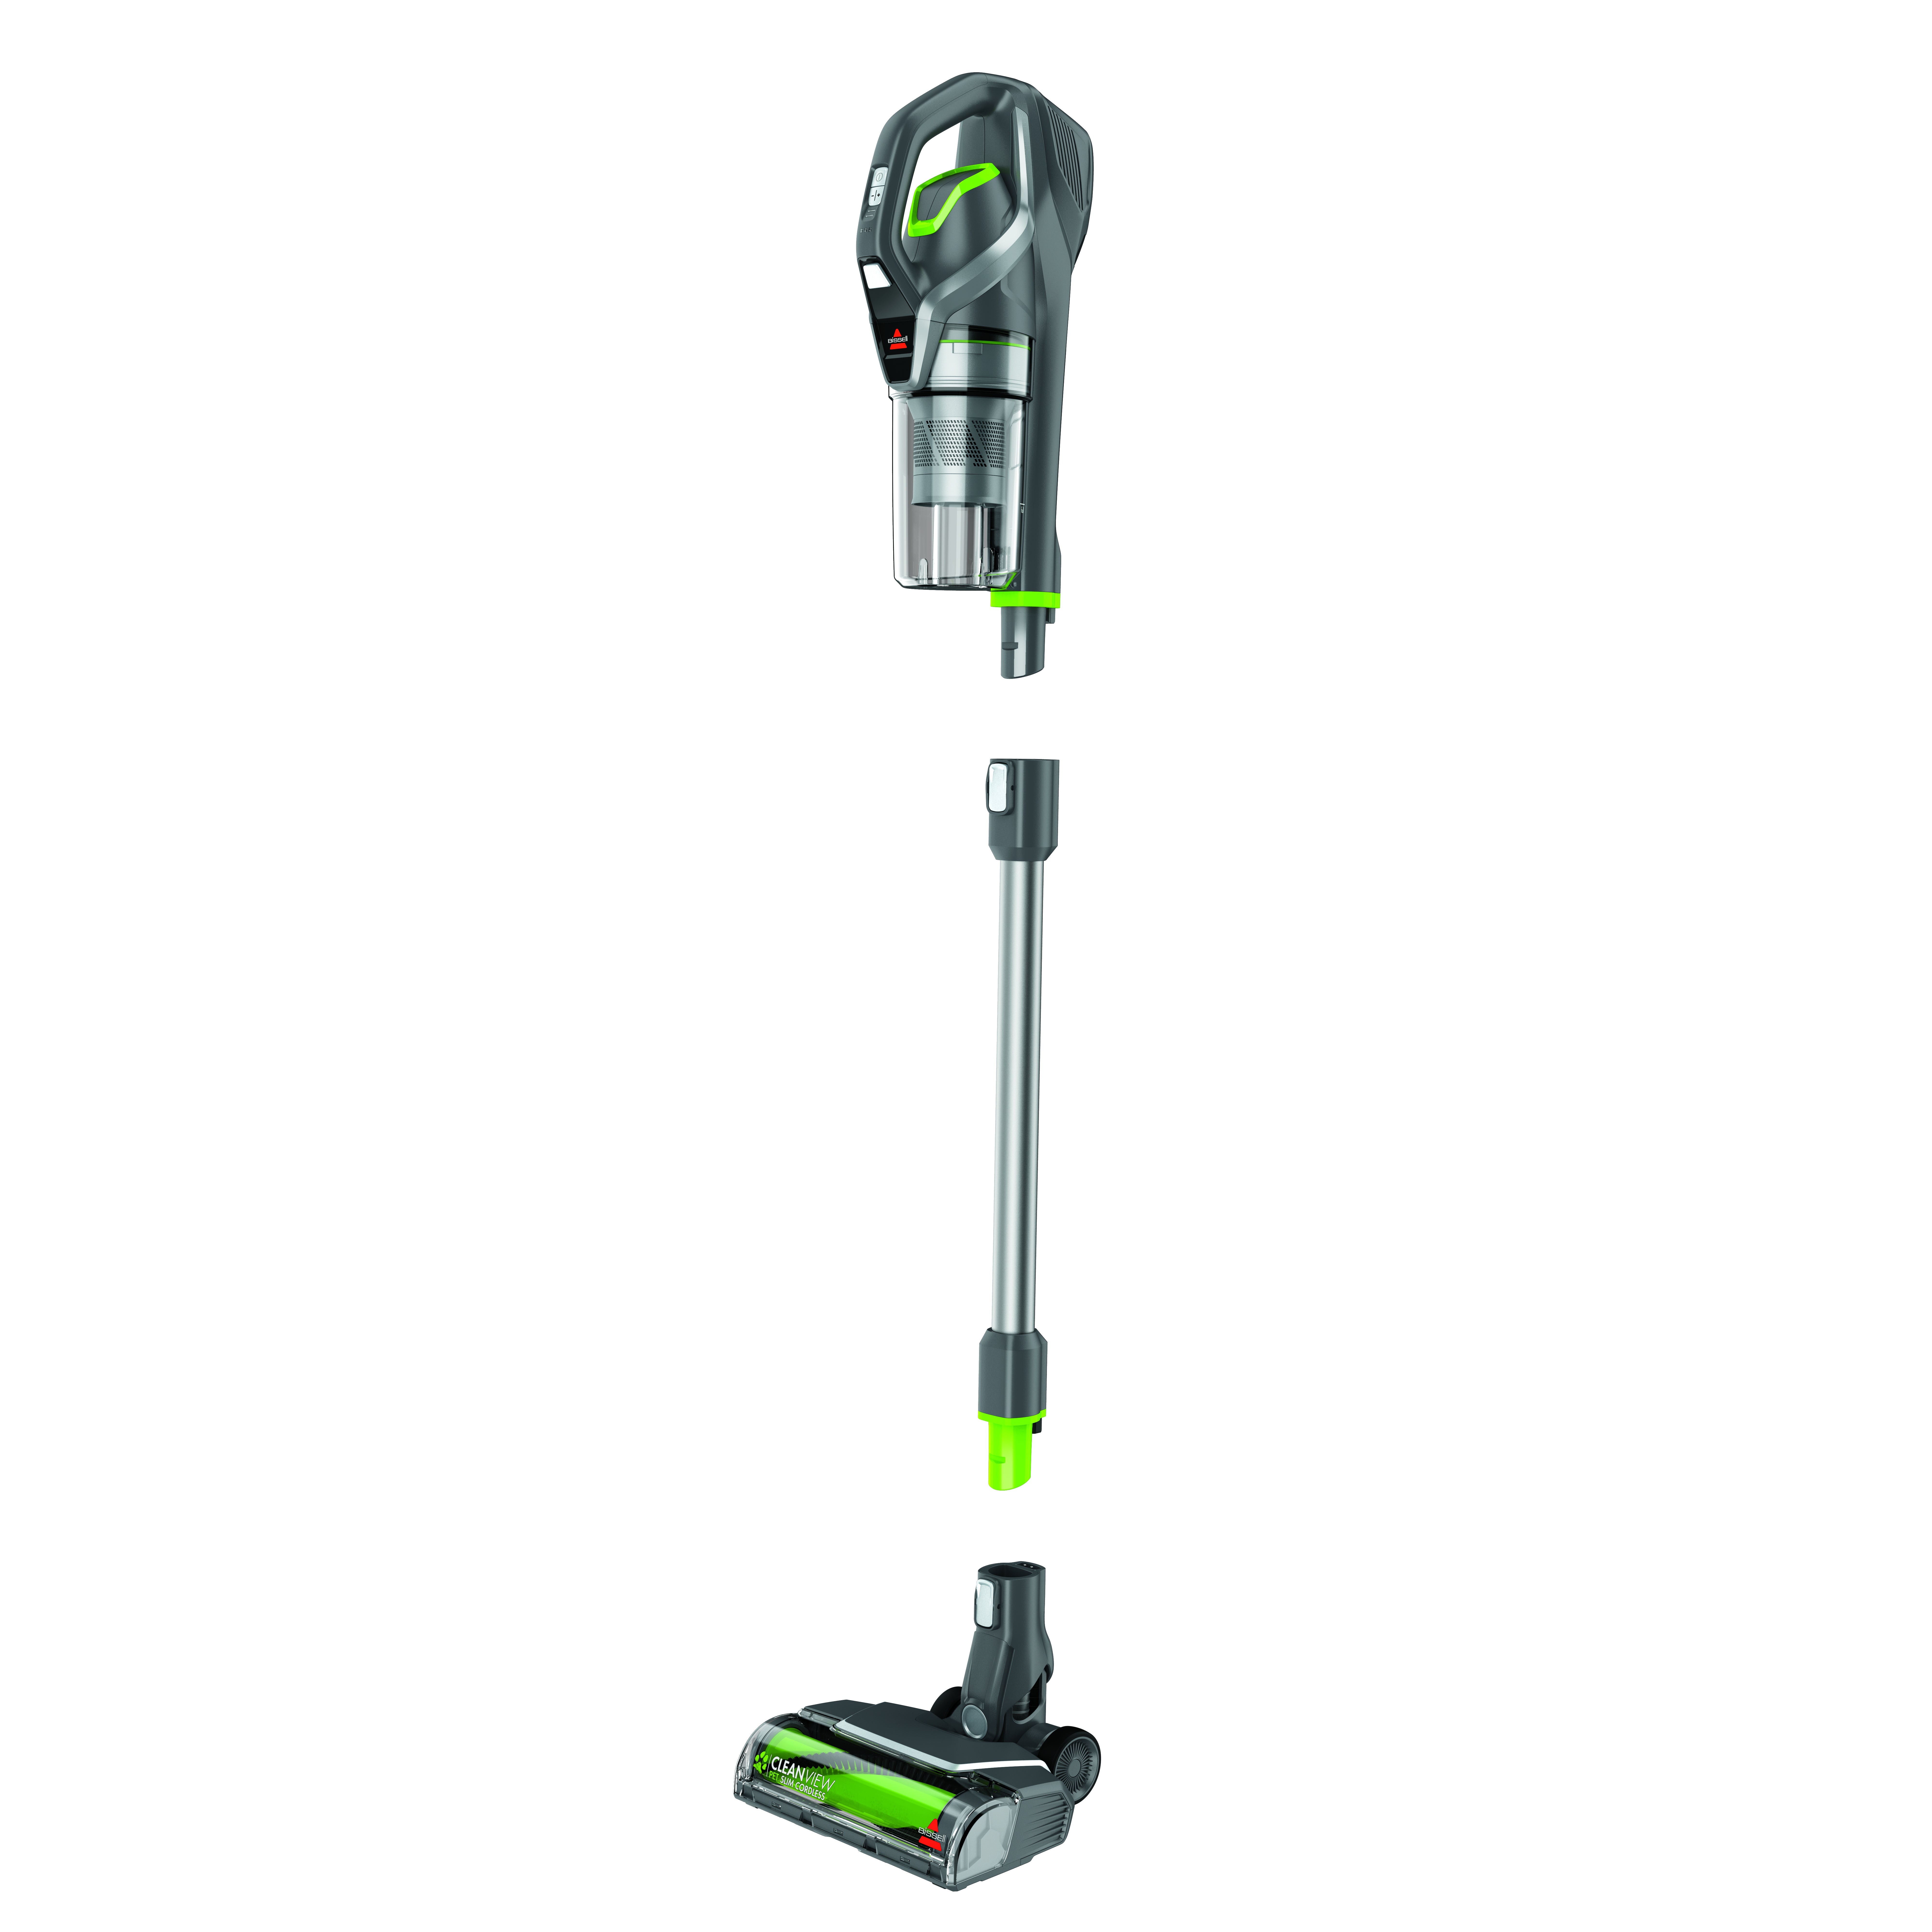 CleanView Pet Slim Cordless Stick Vacuum